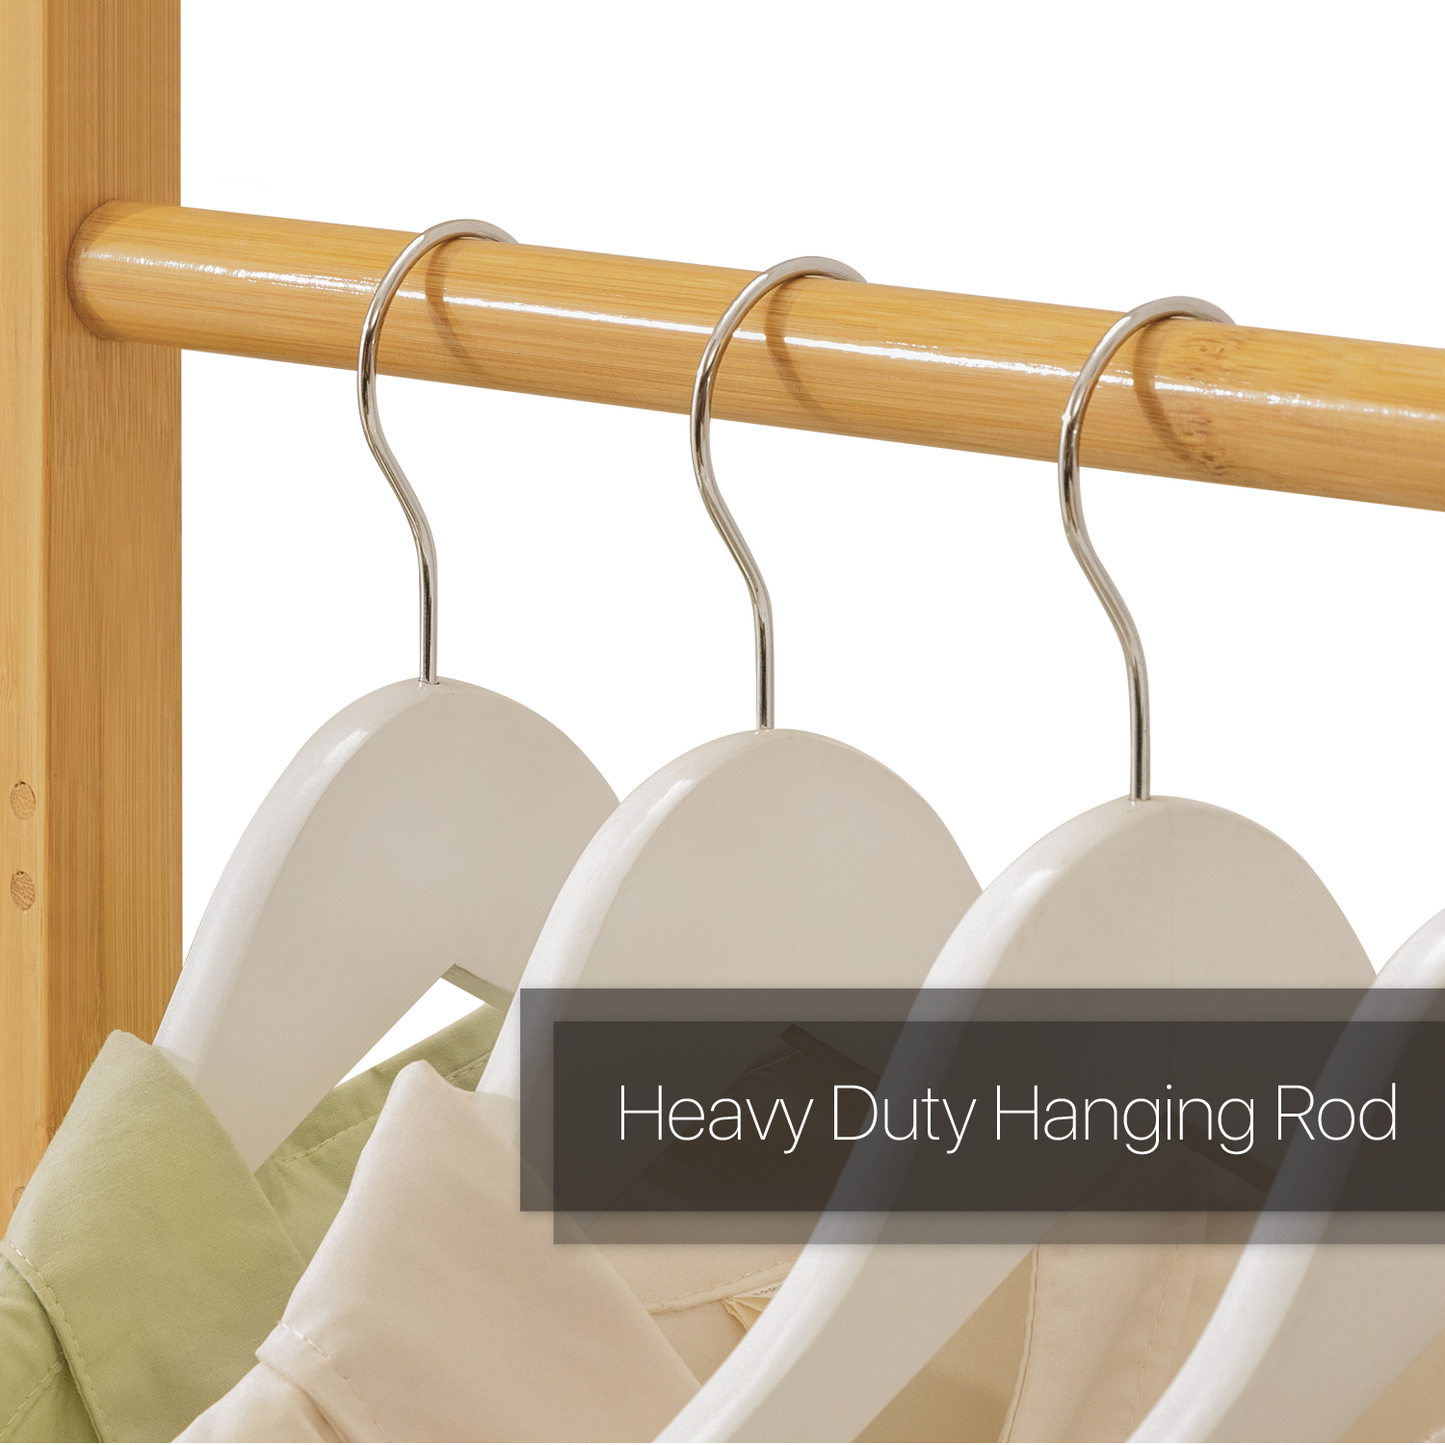 Garment Hanging Stand Rack - Single Shelf - Natural